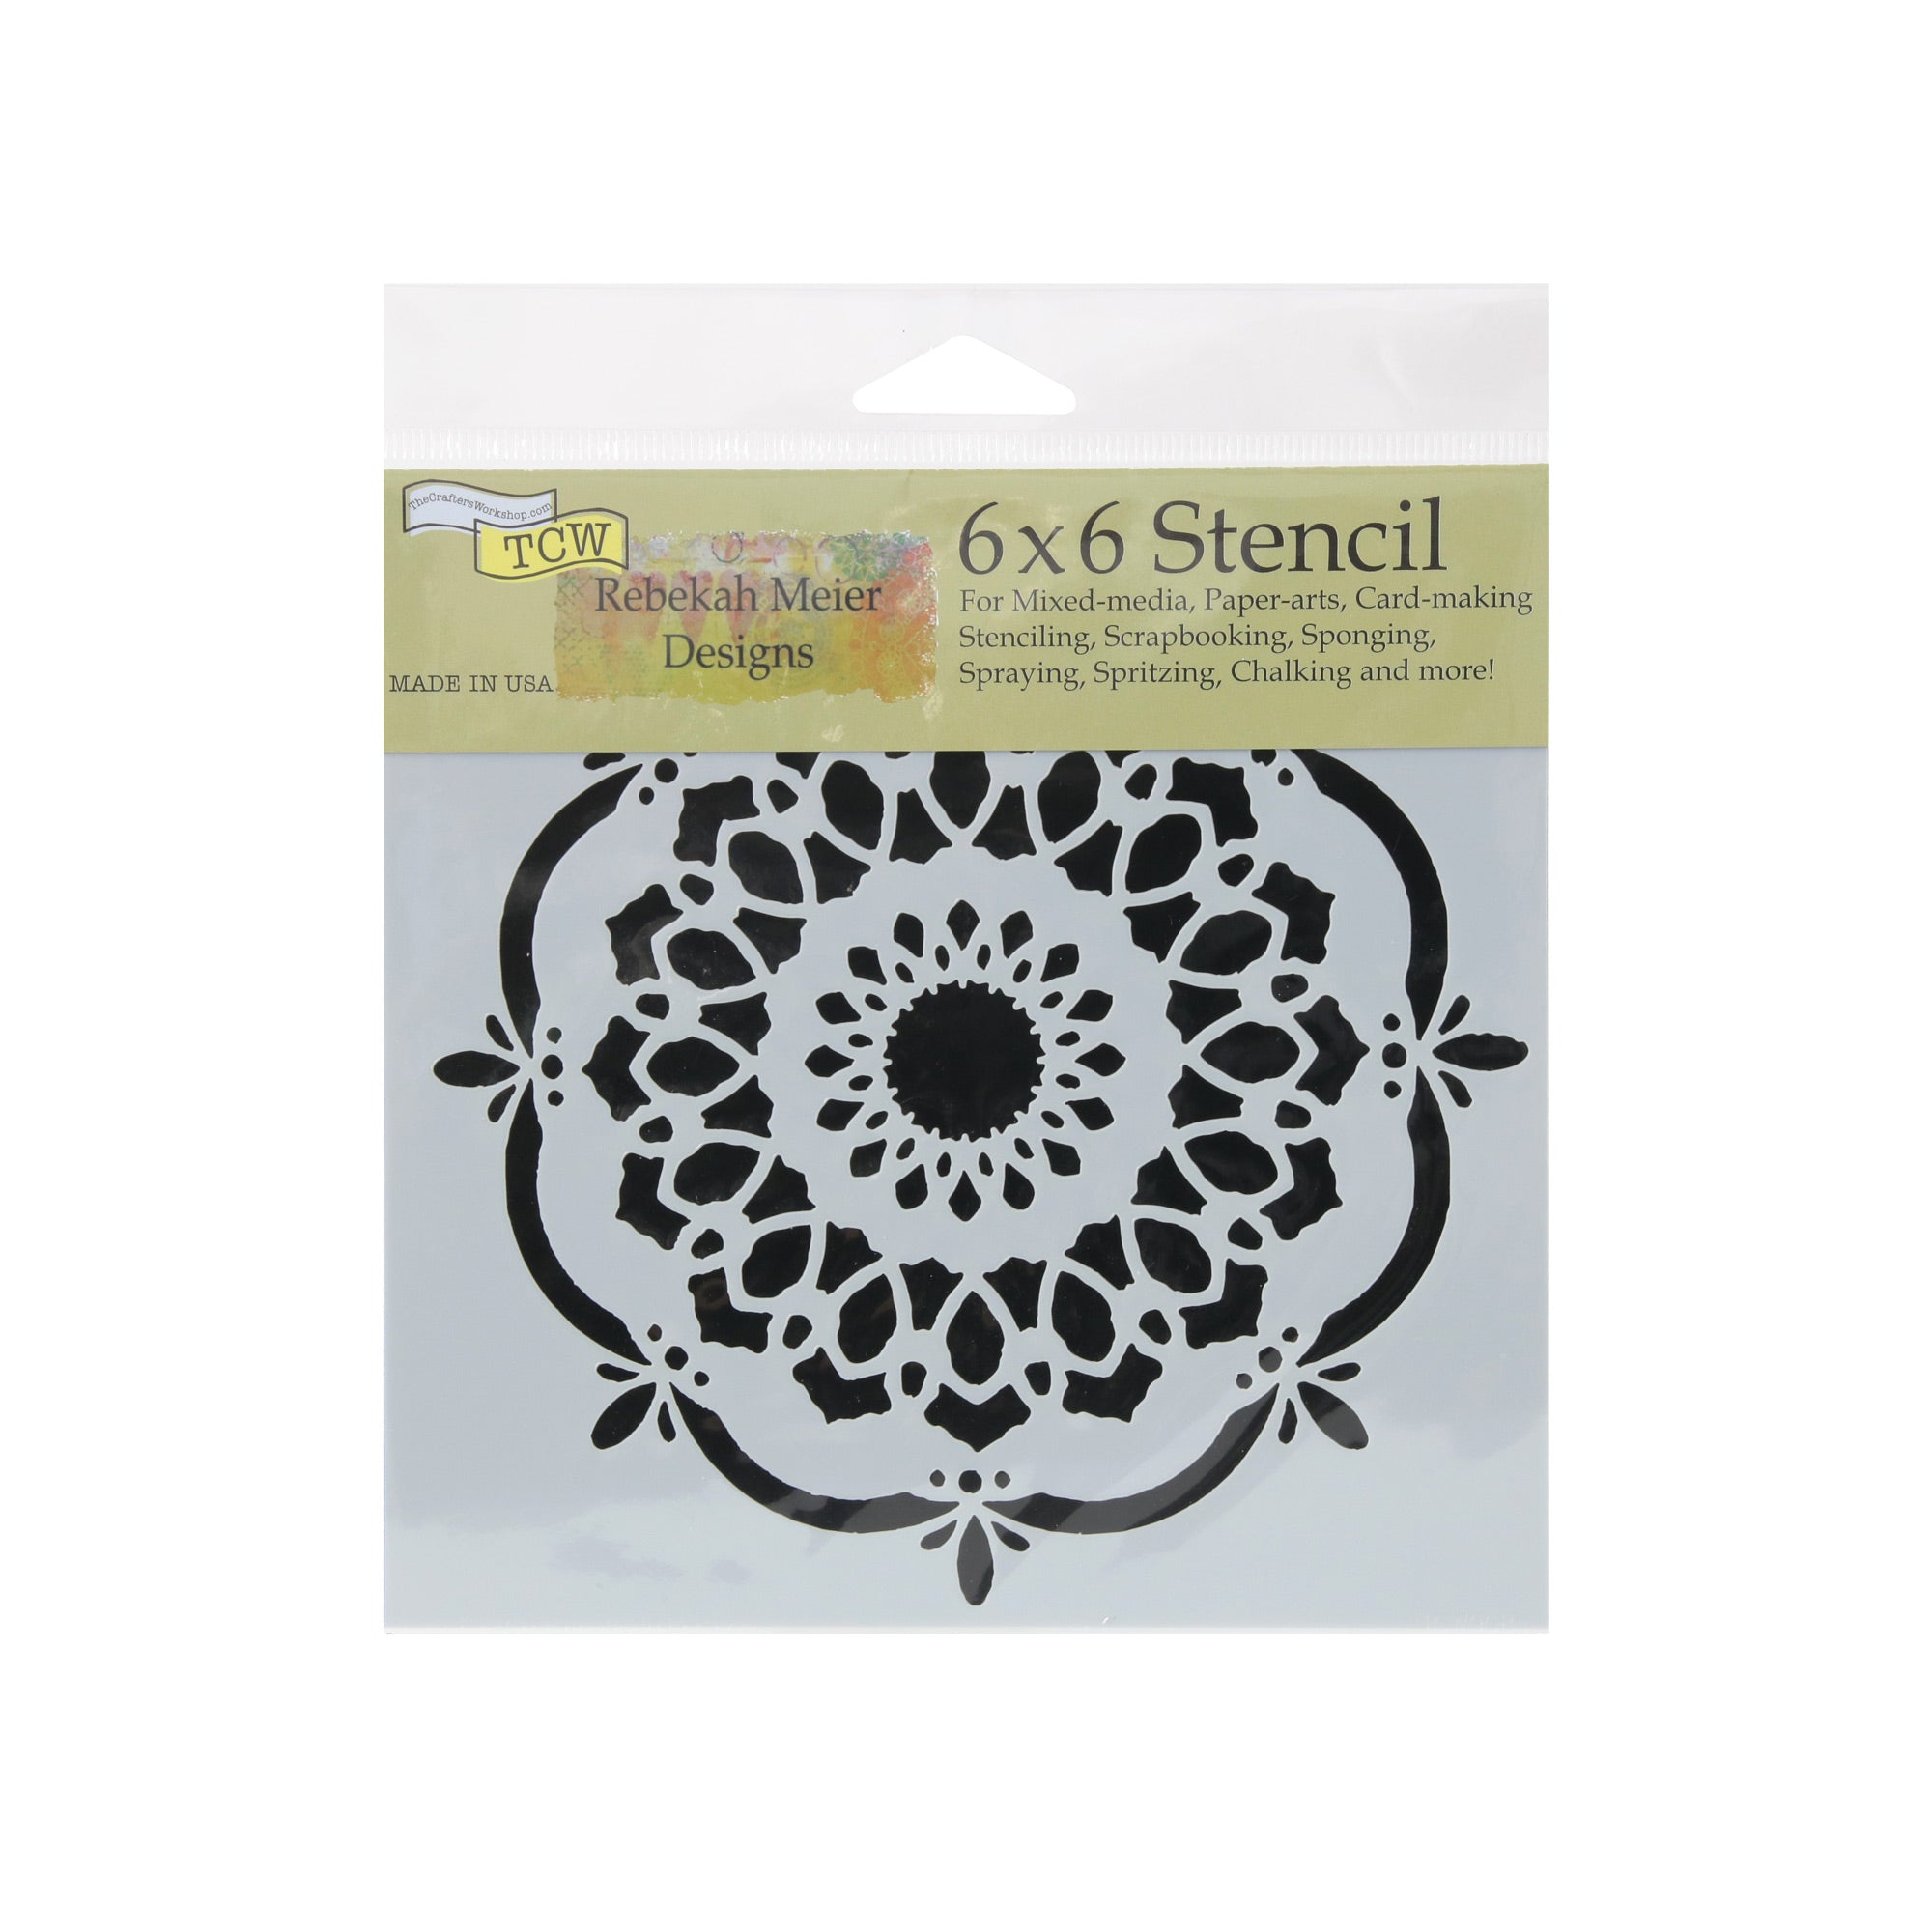 Saral Papier transfert - rouleau 31,6cmx3,66m - blanc - Schleiper -  Catalogue online complet